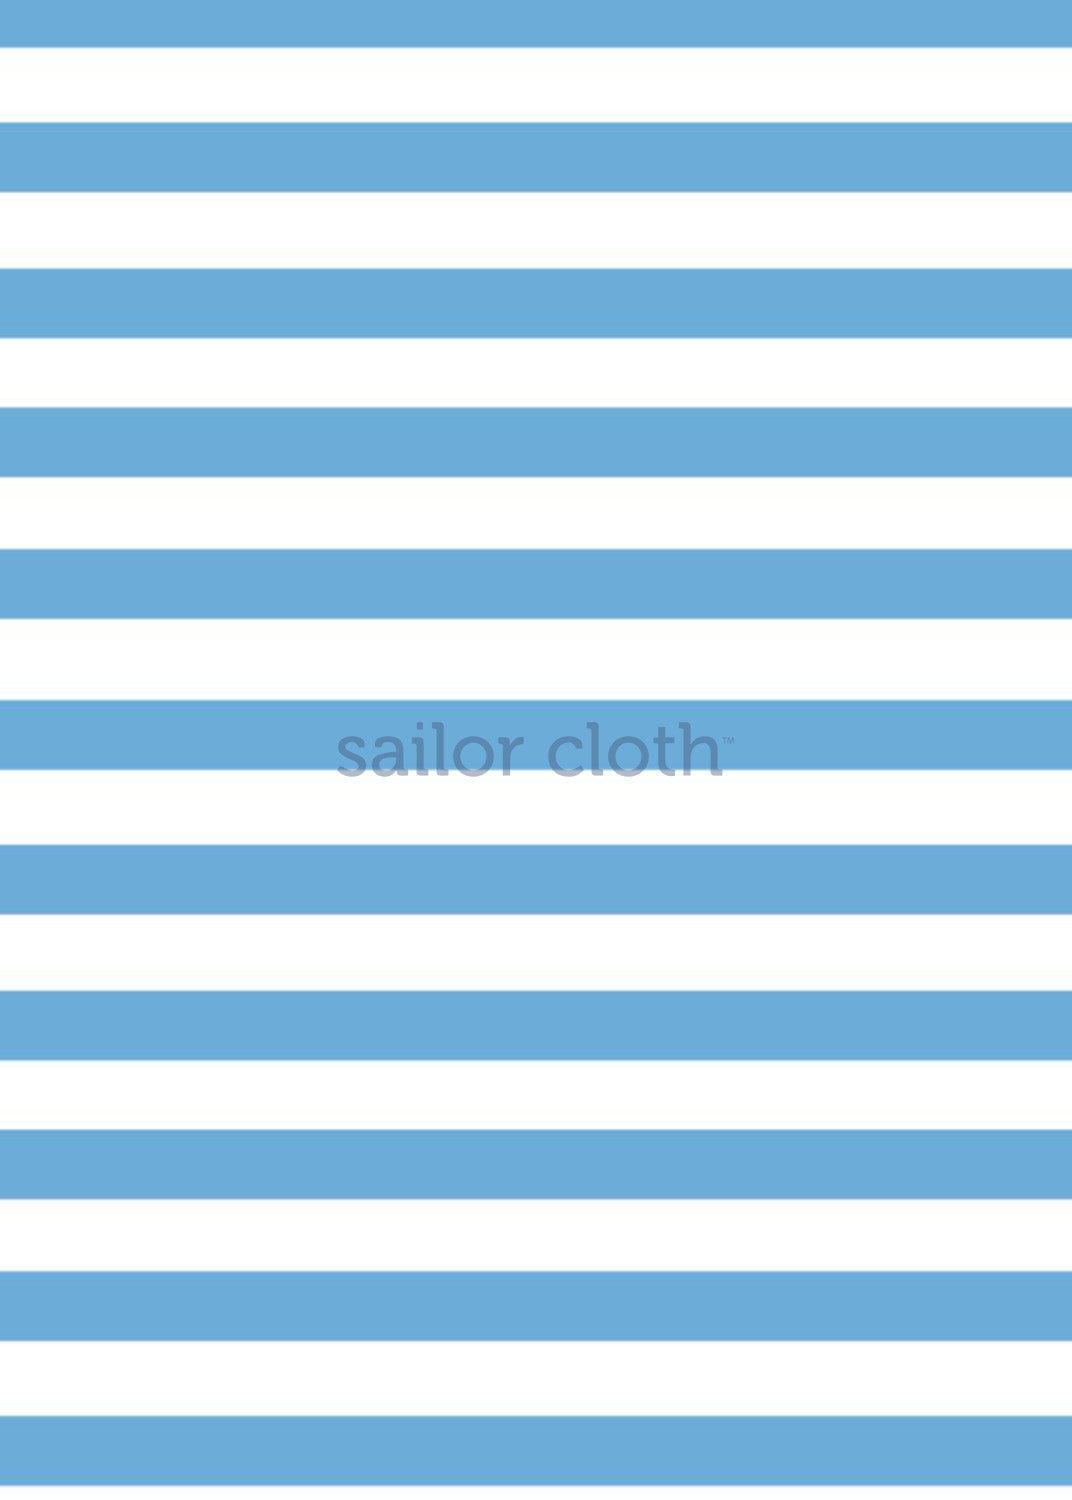 Cricket Sleeveless Dress - Stripe Light Blue